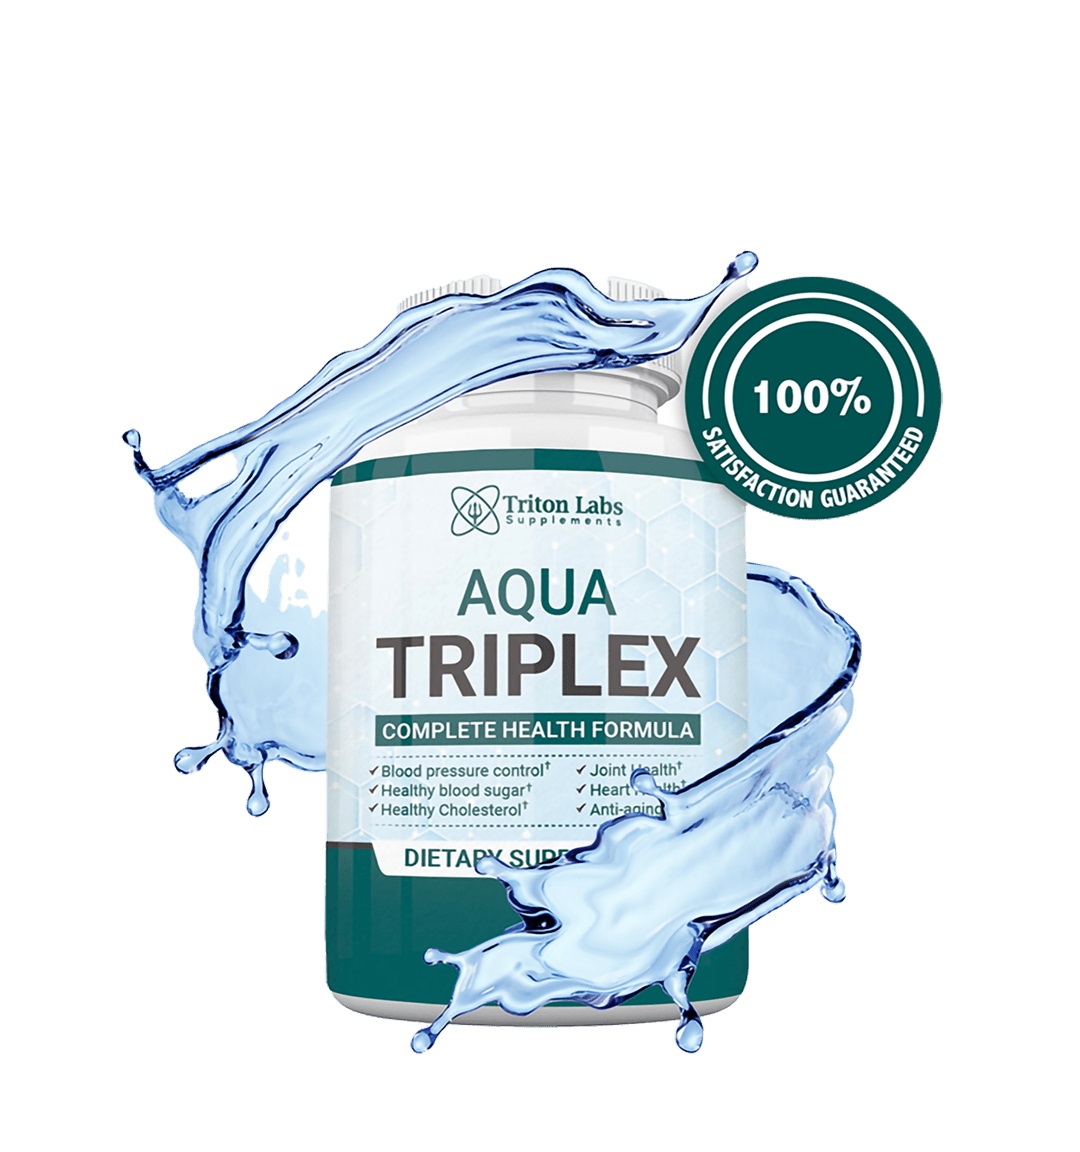 Does Aqua Triplex Work? How Can I Take It? Is it worth it? Reviews